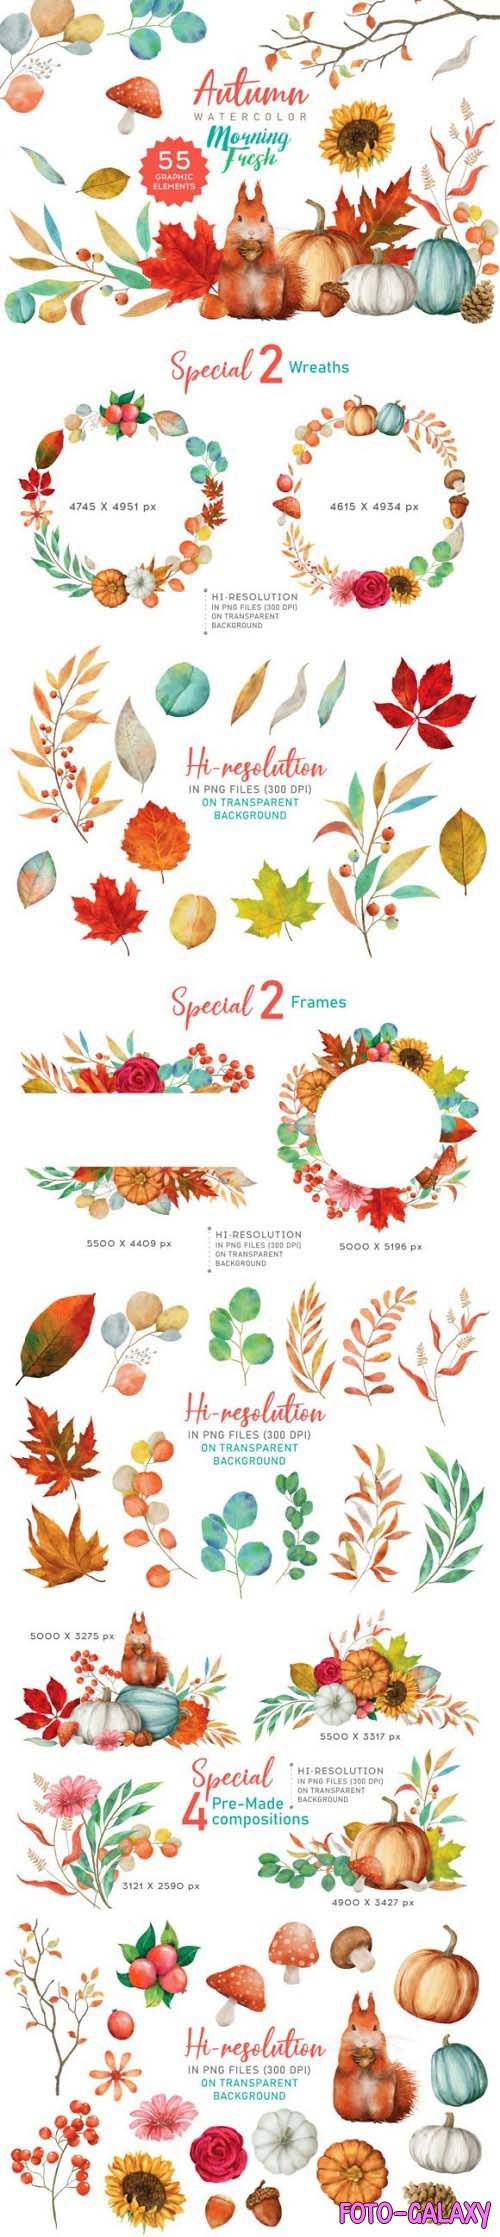 Autumn Leaves Watercolor PNG Elements